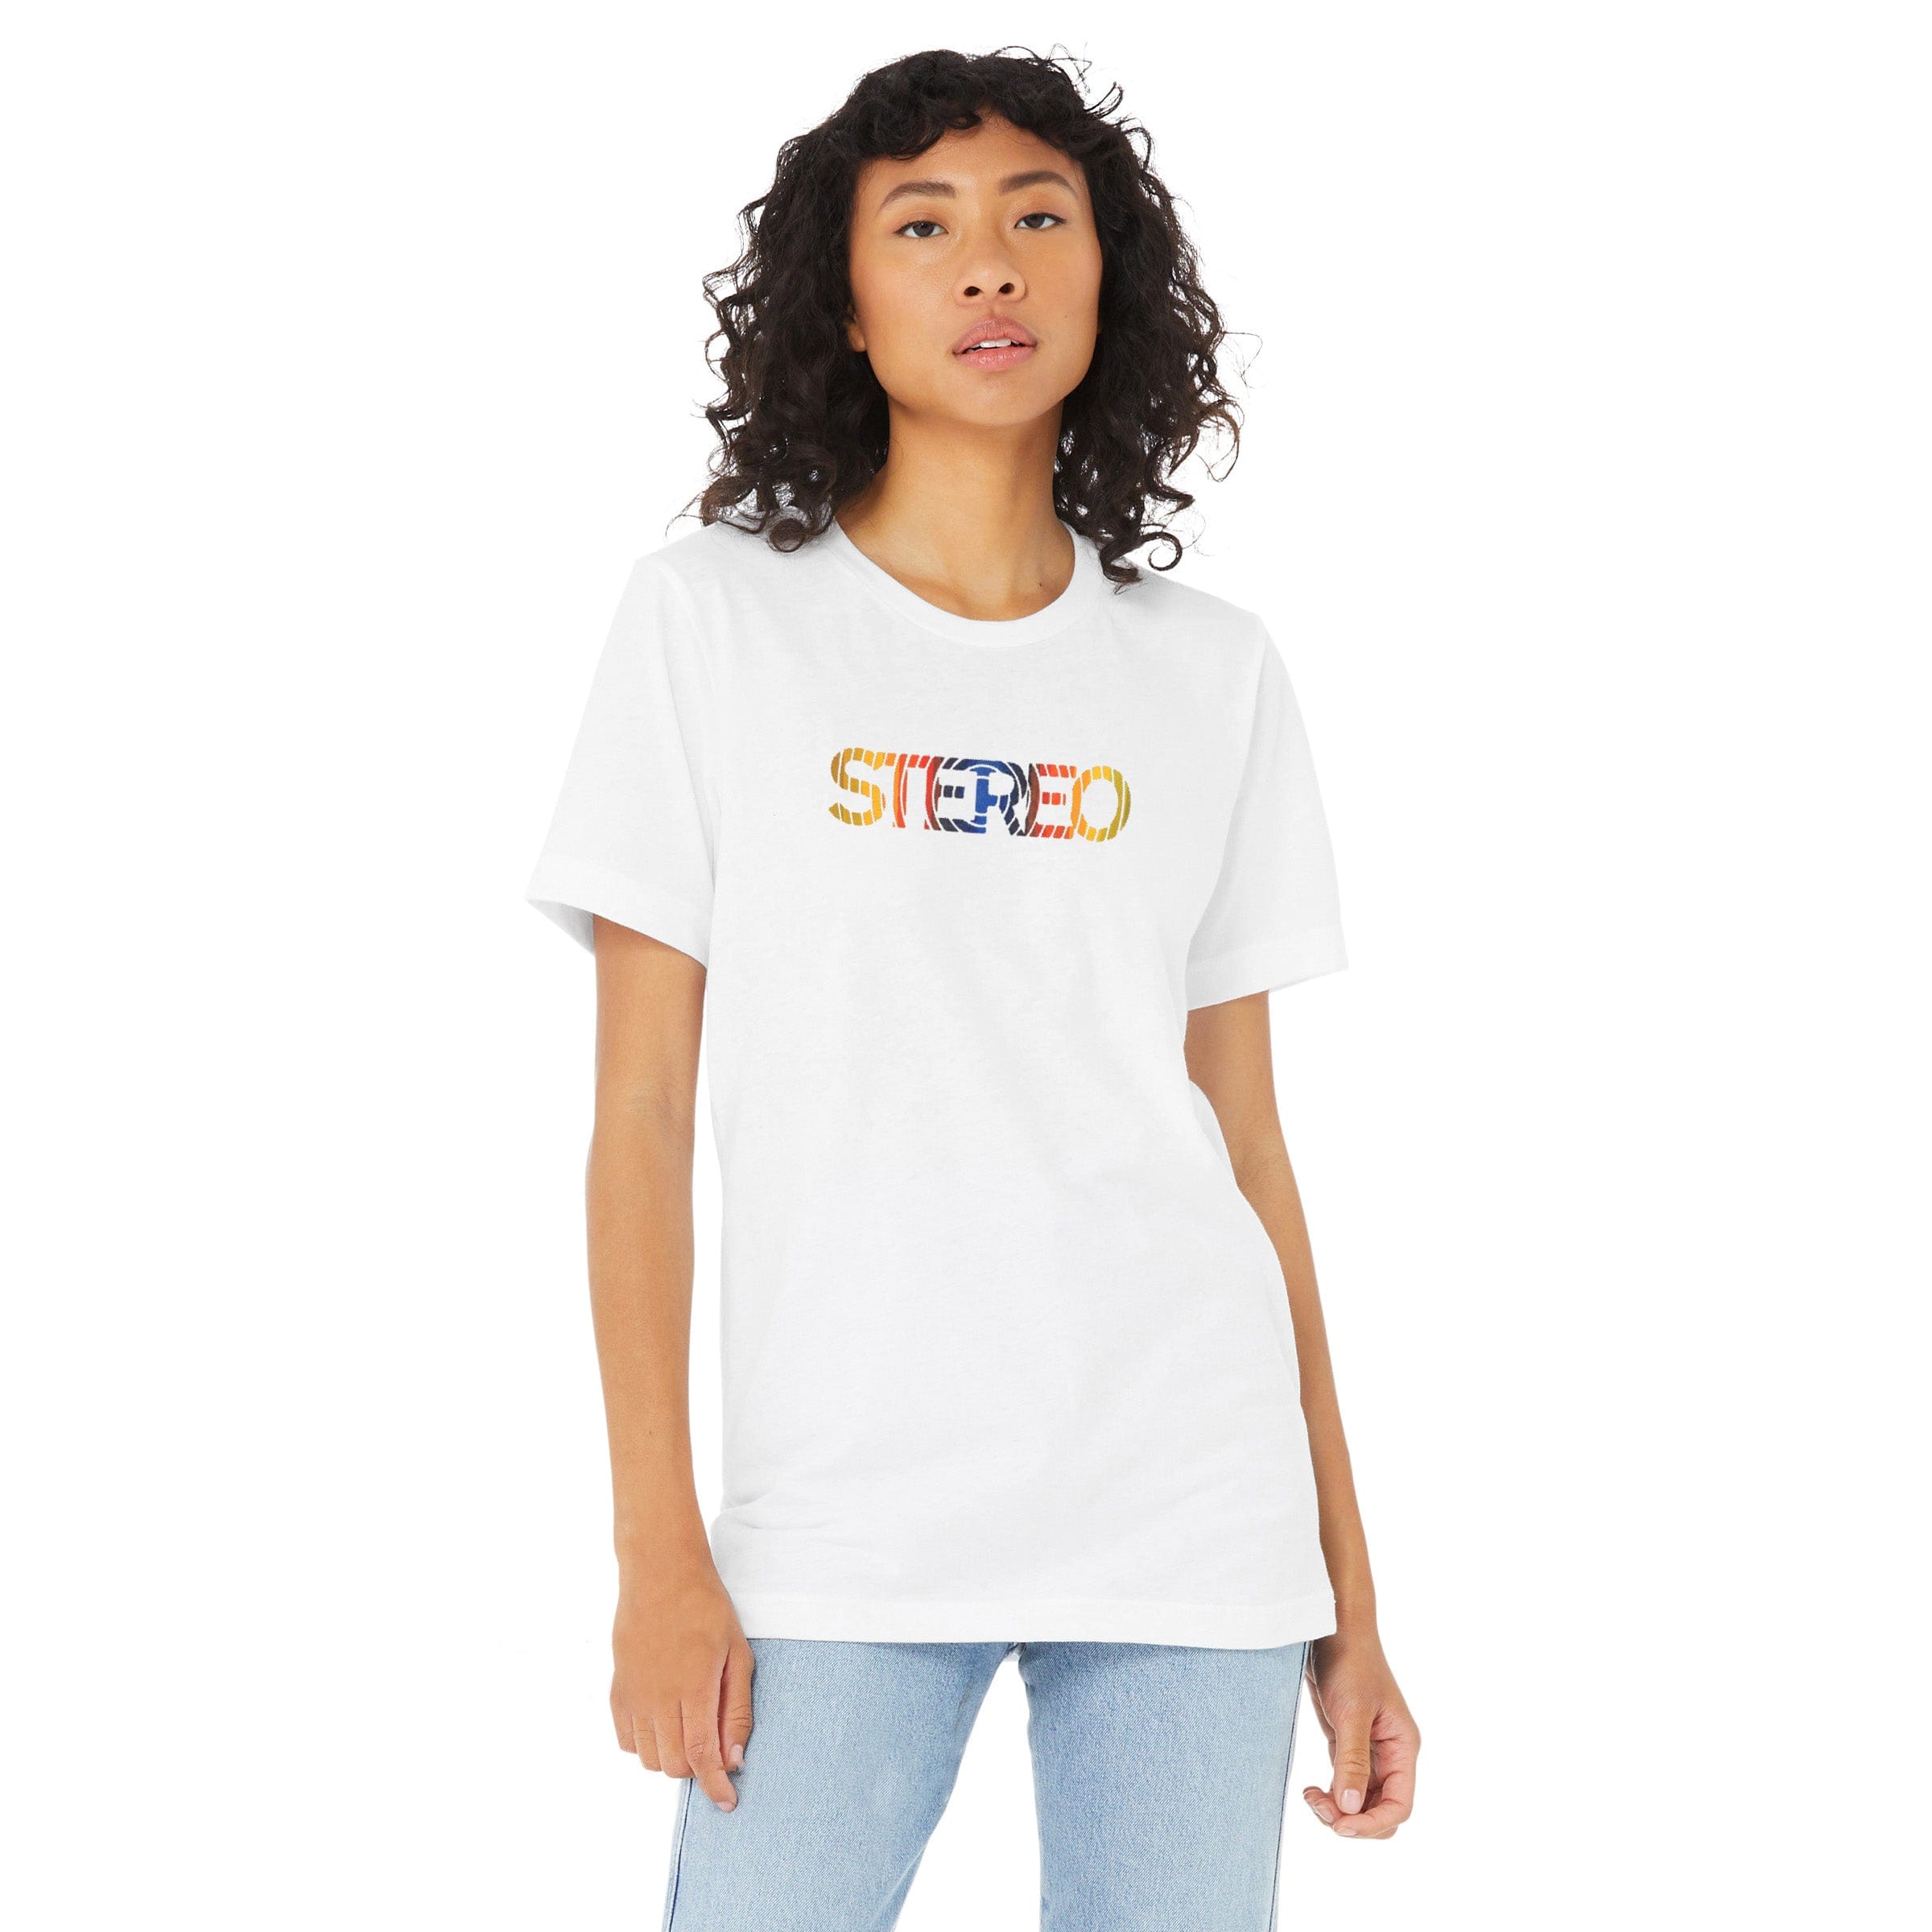 Stereo: Sonar T-Shirt